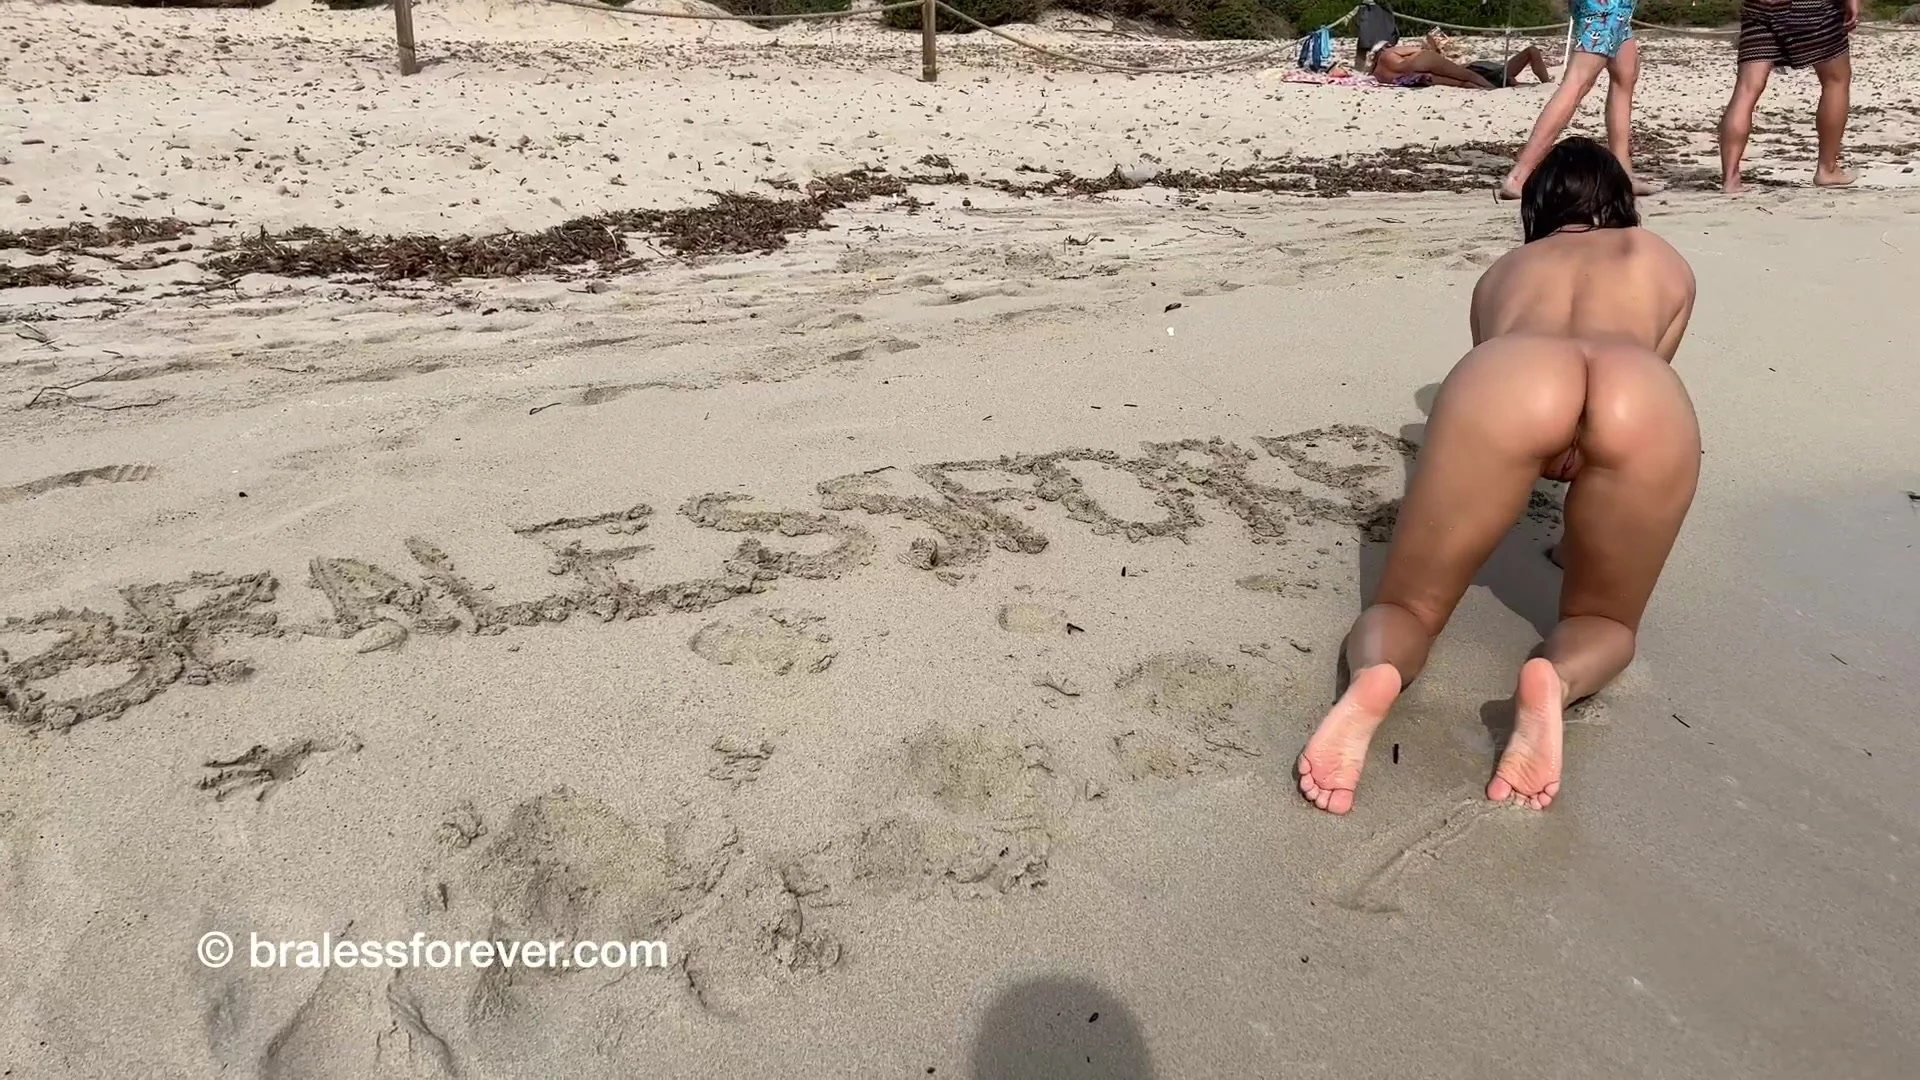 At the public beach nude! - ThisVid.com